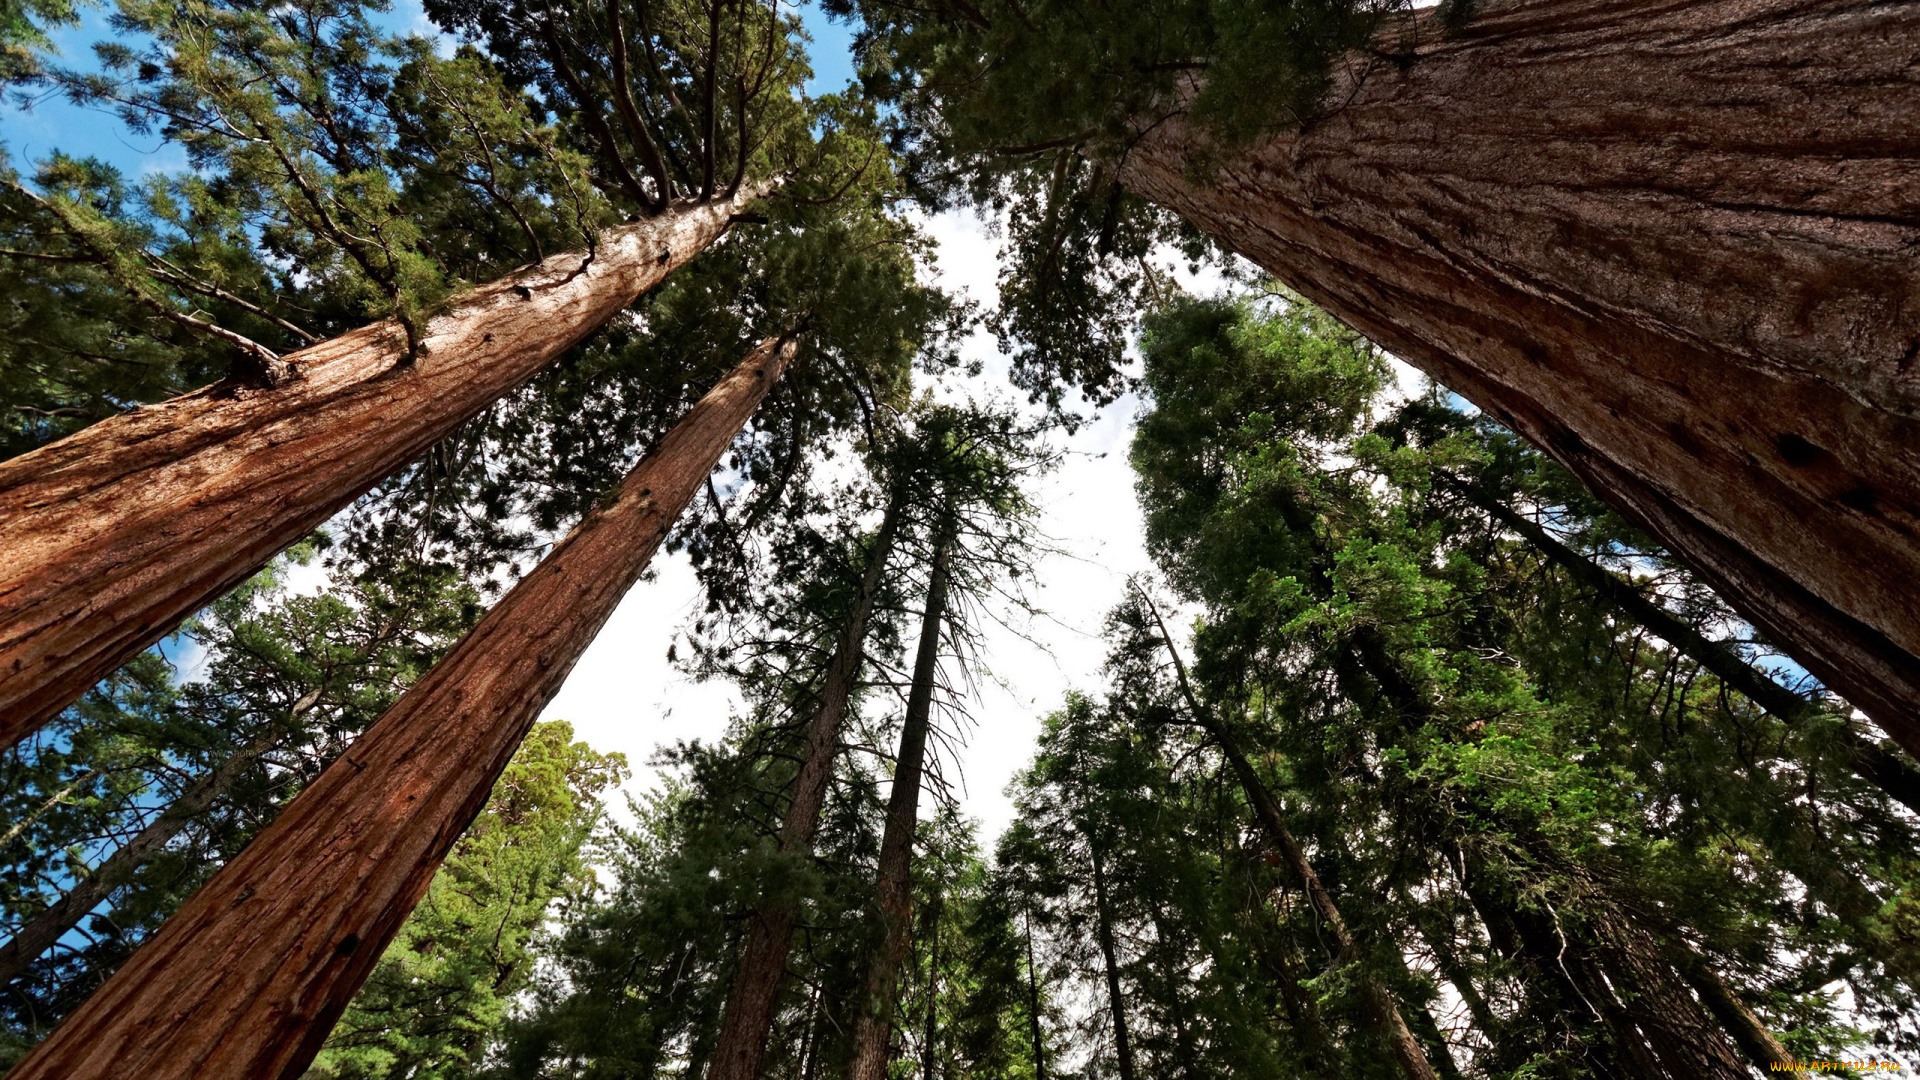 giant, sequoia, природа, деревья, лес, национальный, парк, дерево, giant, sequoia